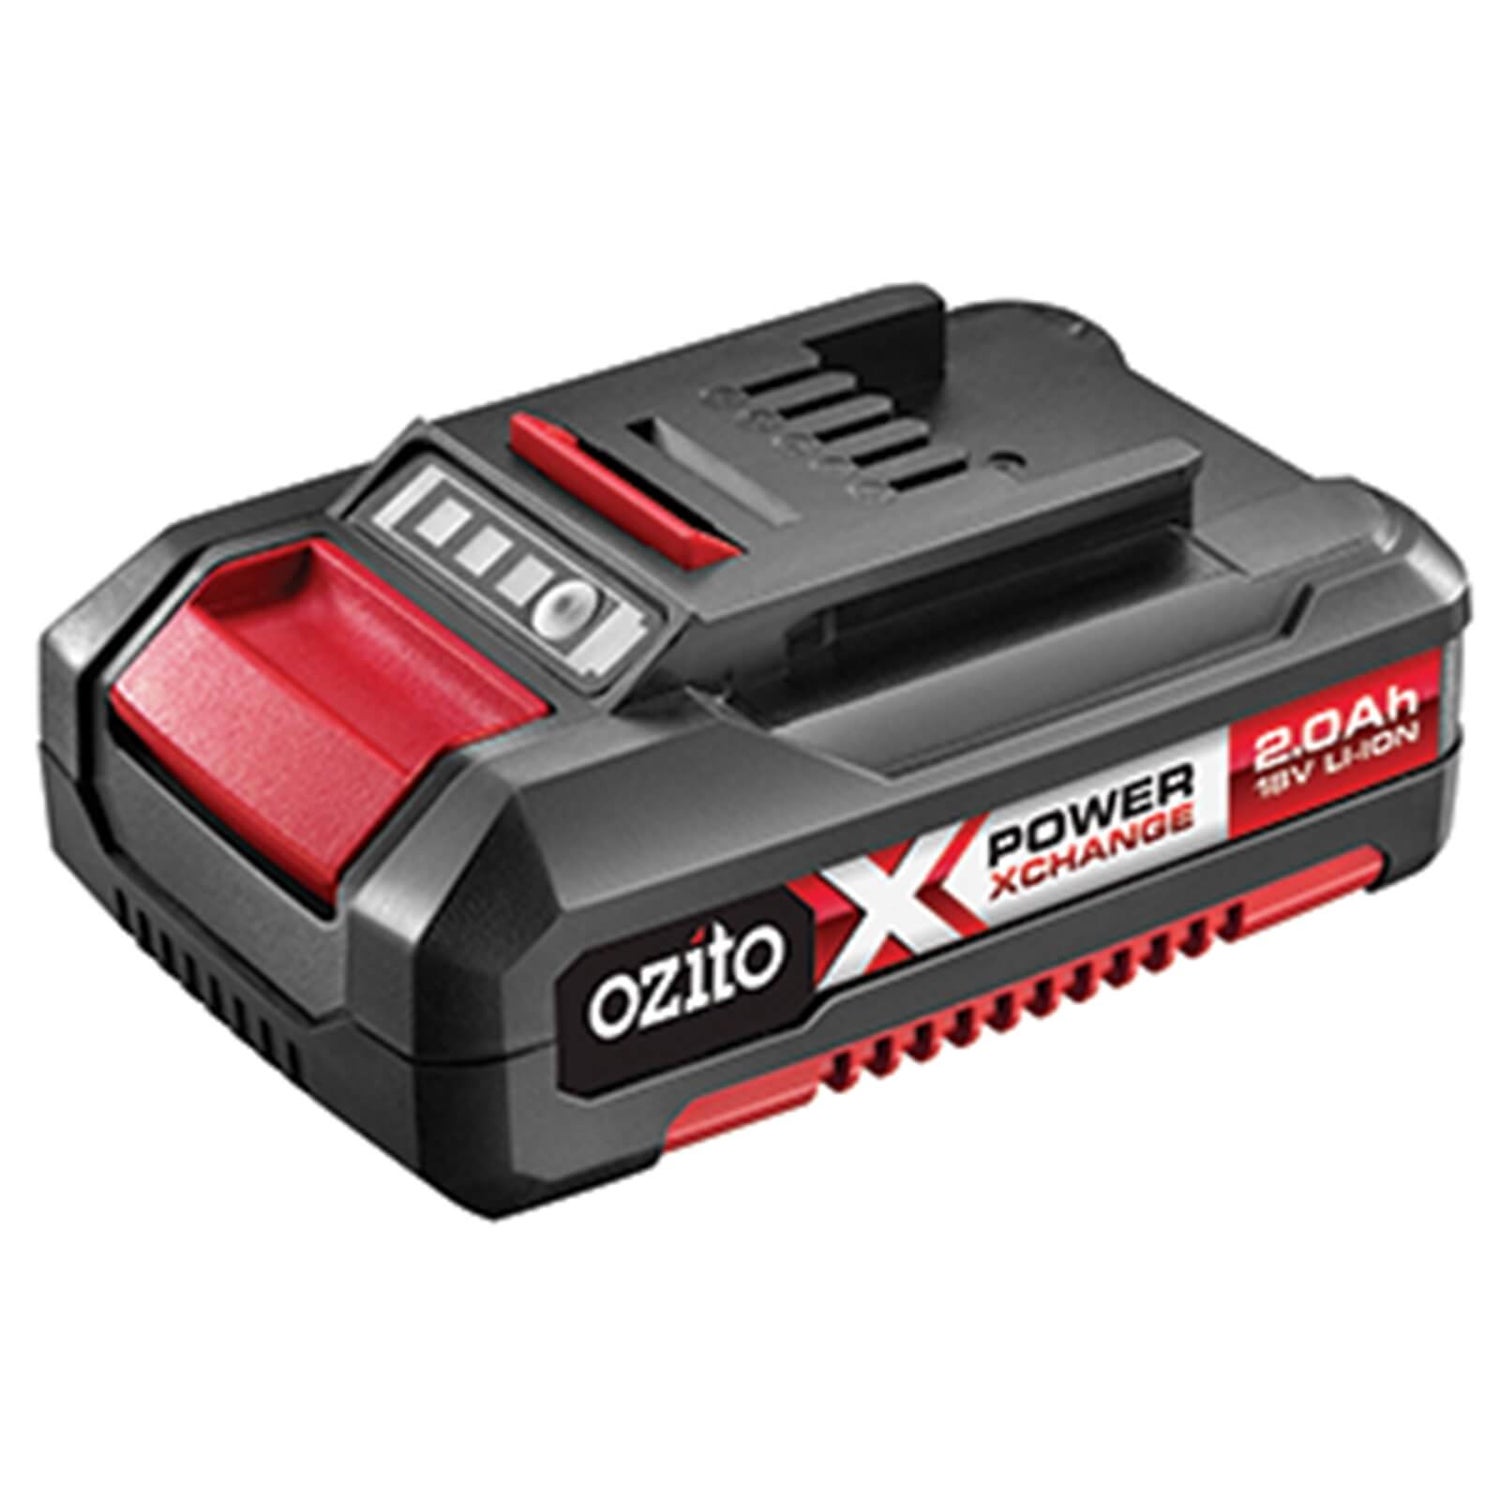 Ozito Not Einhell Cordless LED Worklight 18v Power X Change 